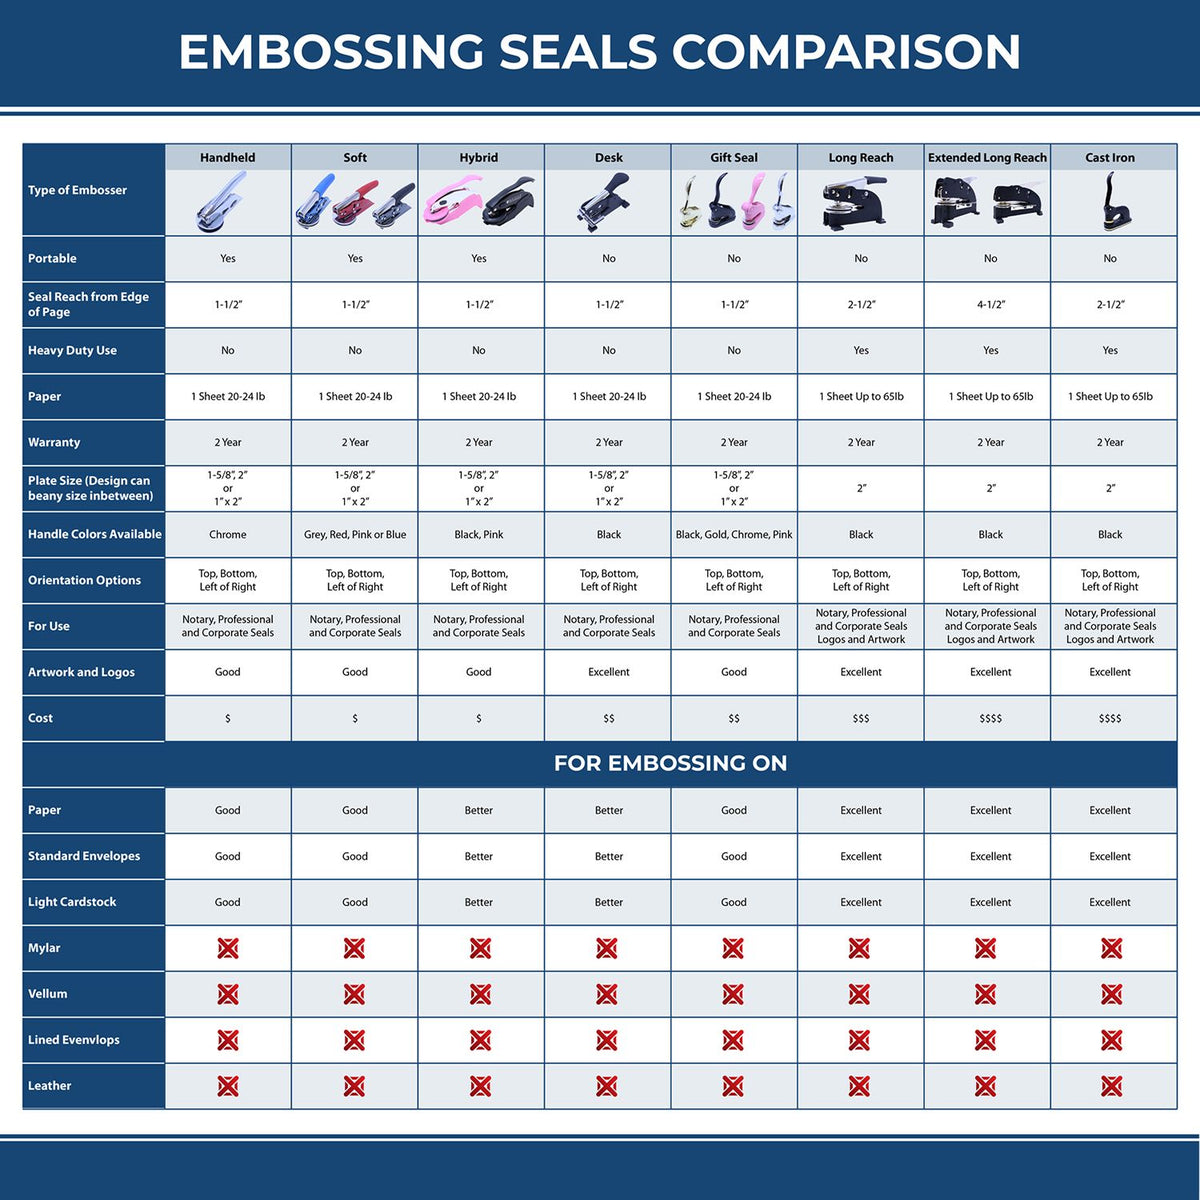 Geologist Gold Gift Seal Embosser 3026GEO Embossing Seal Comparison